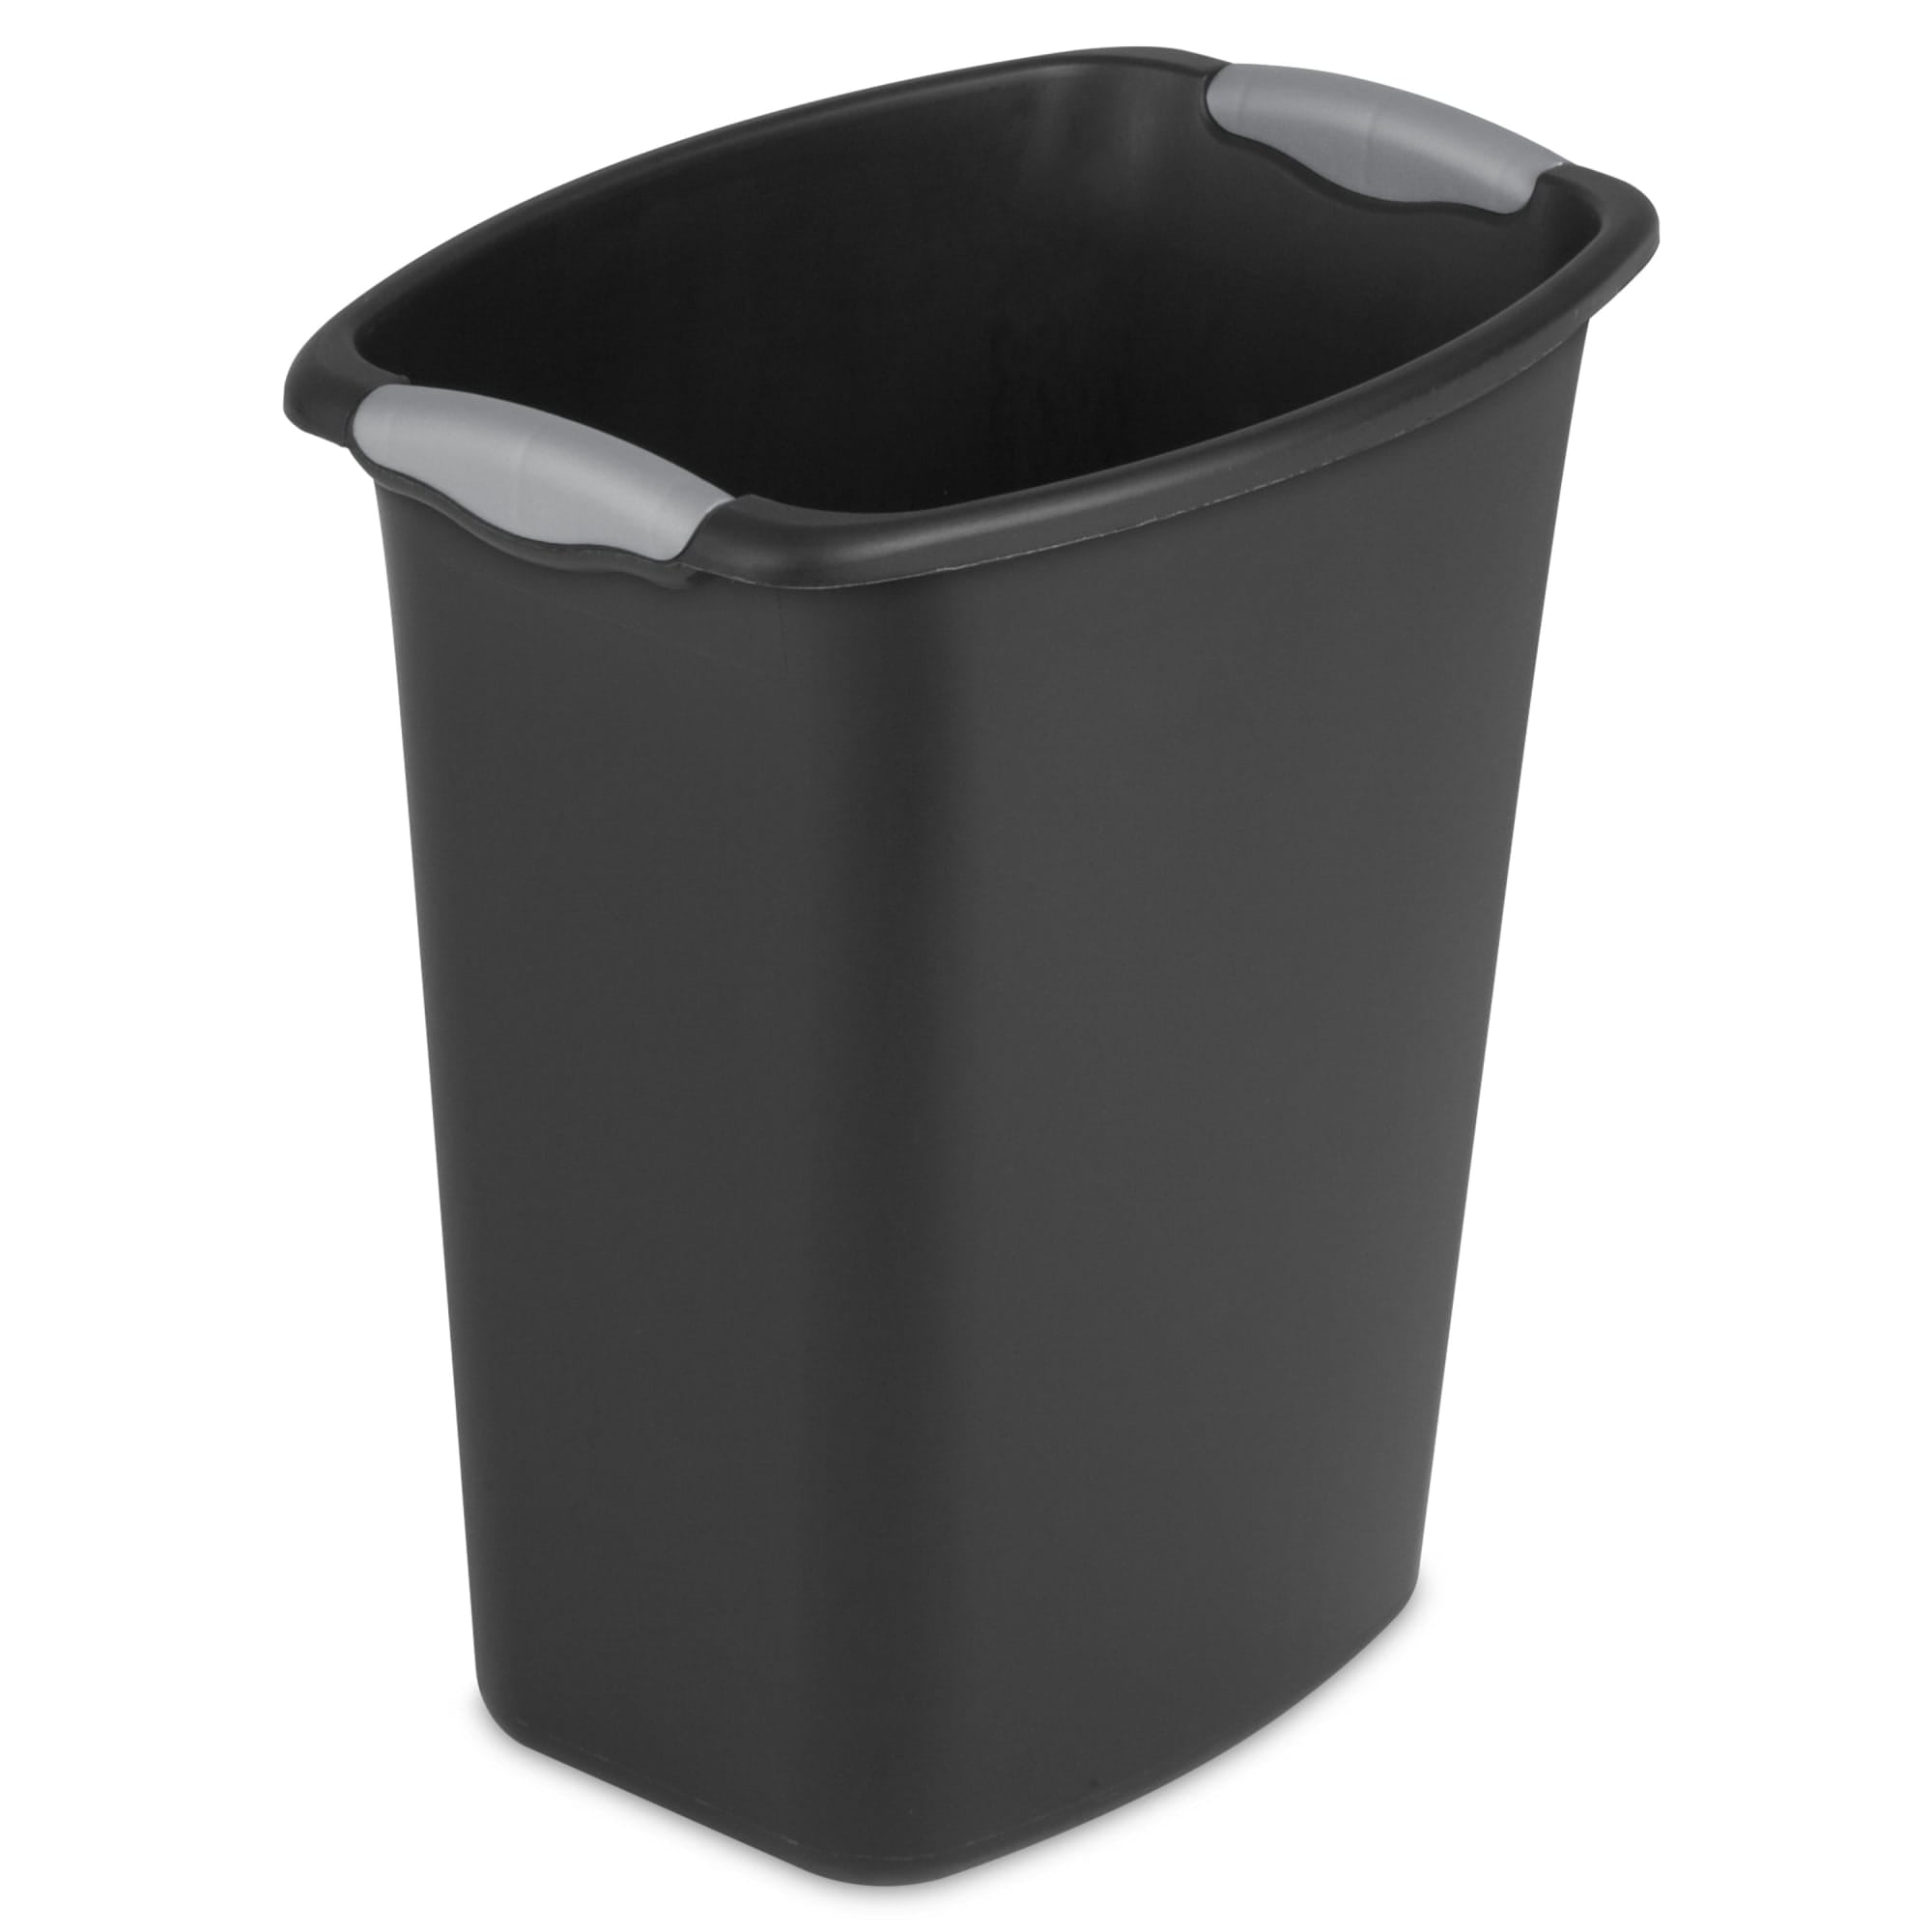 Sterilite 3 Gallon/11.4 Liter Wastebasket Black $5.00 EACH, CASE PACK OF 6